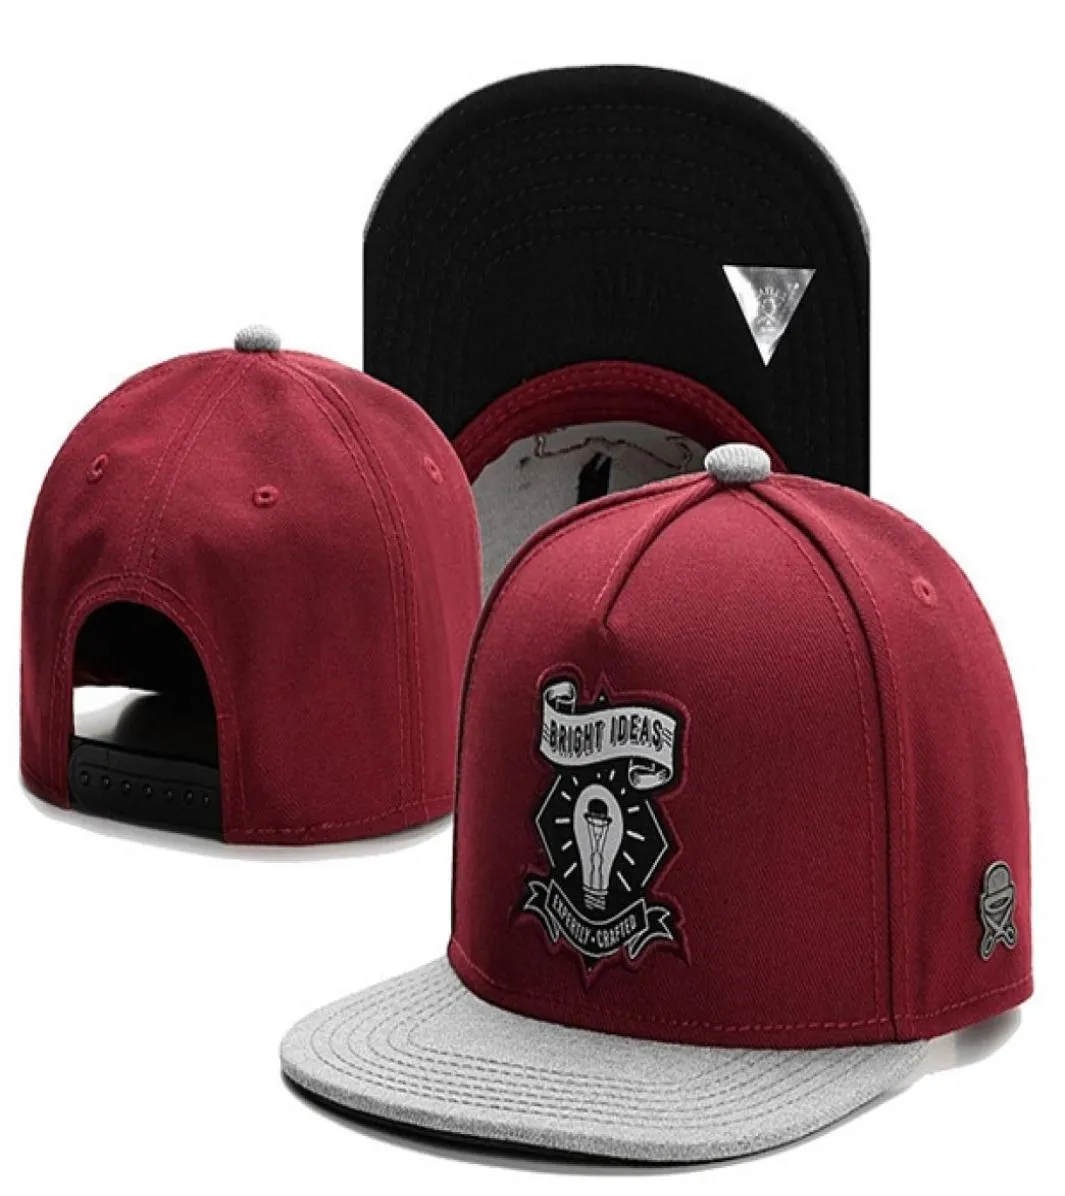 Bright Ibeas Baseball Caps 2020 Fashion Casual Hip Hop Men Women Summer Style Bone Snapback Hats3774694